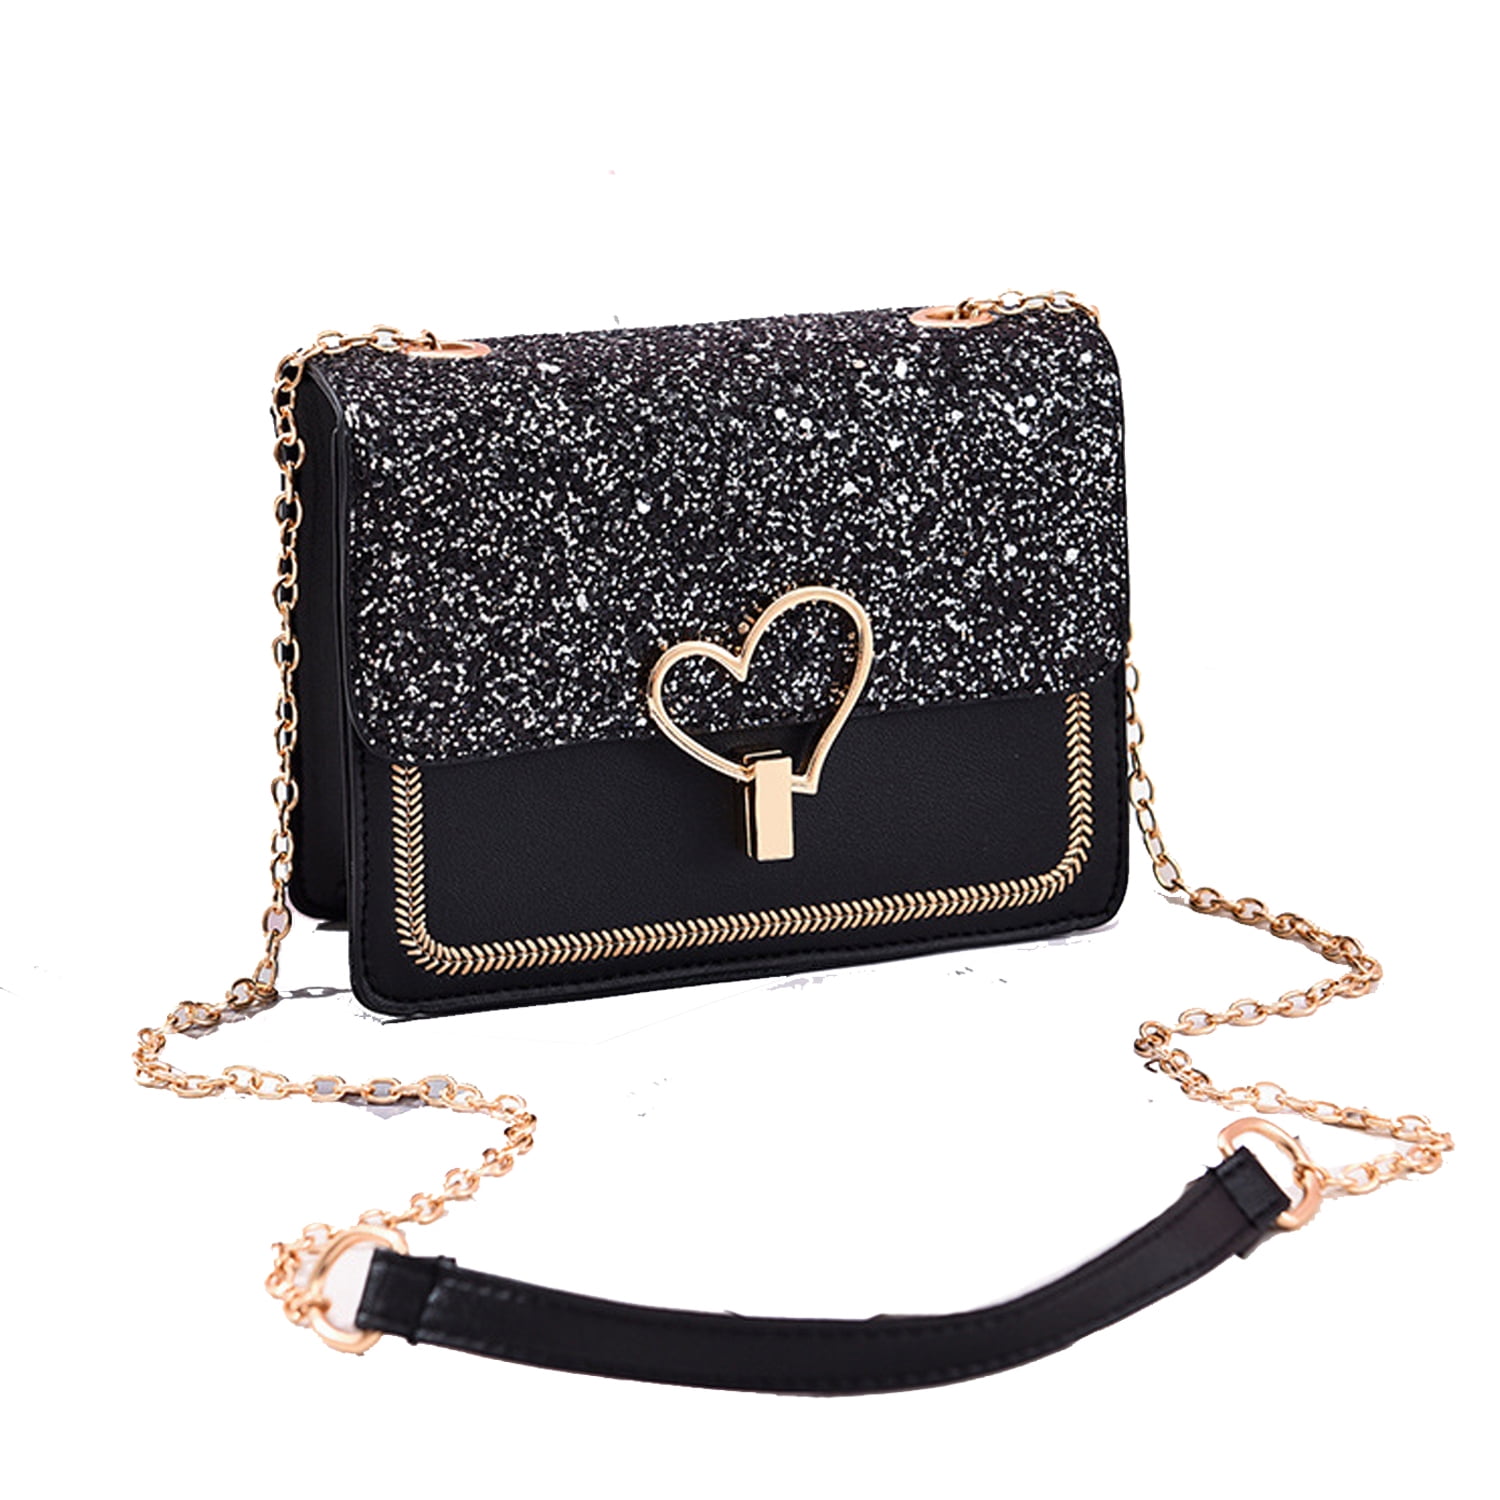 Shop Cute Little Bag For Girls online | Lazada.com.ph